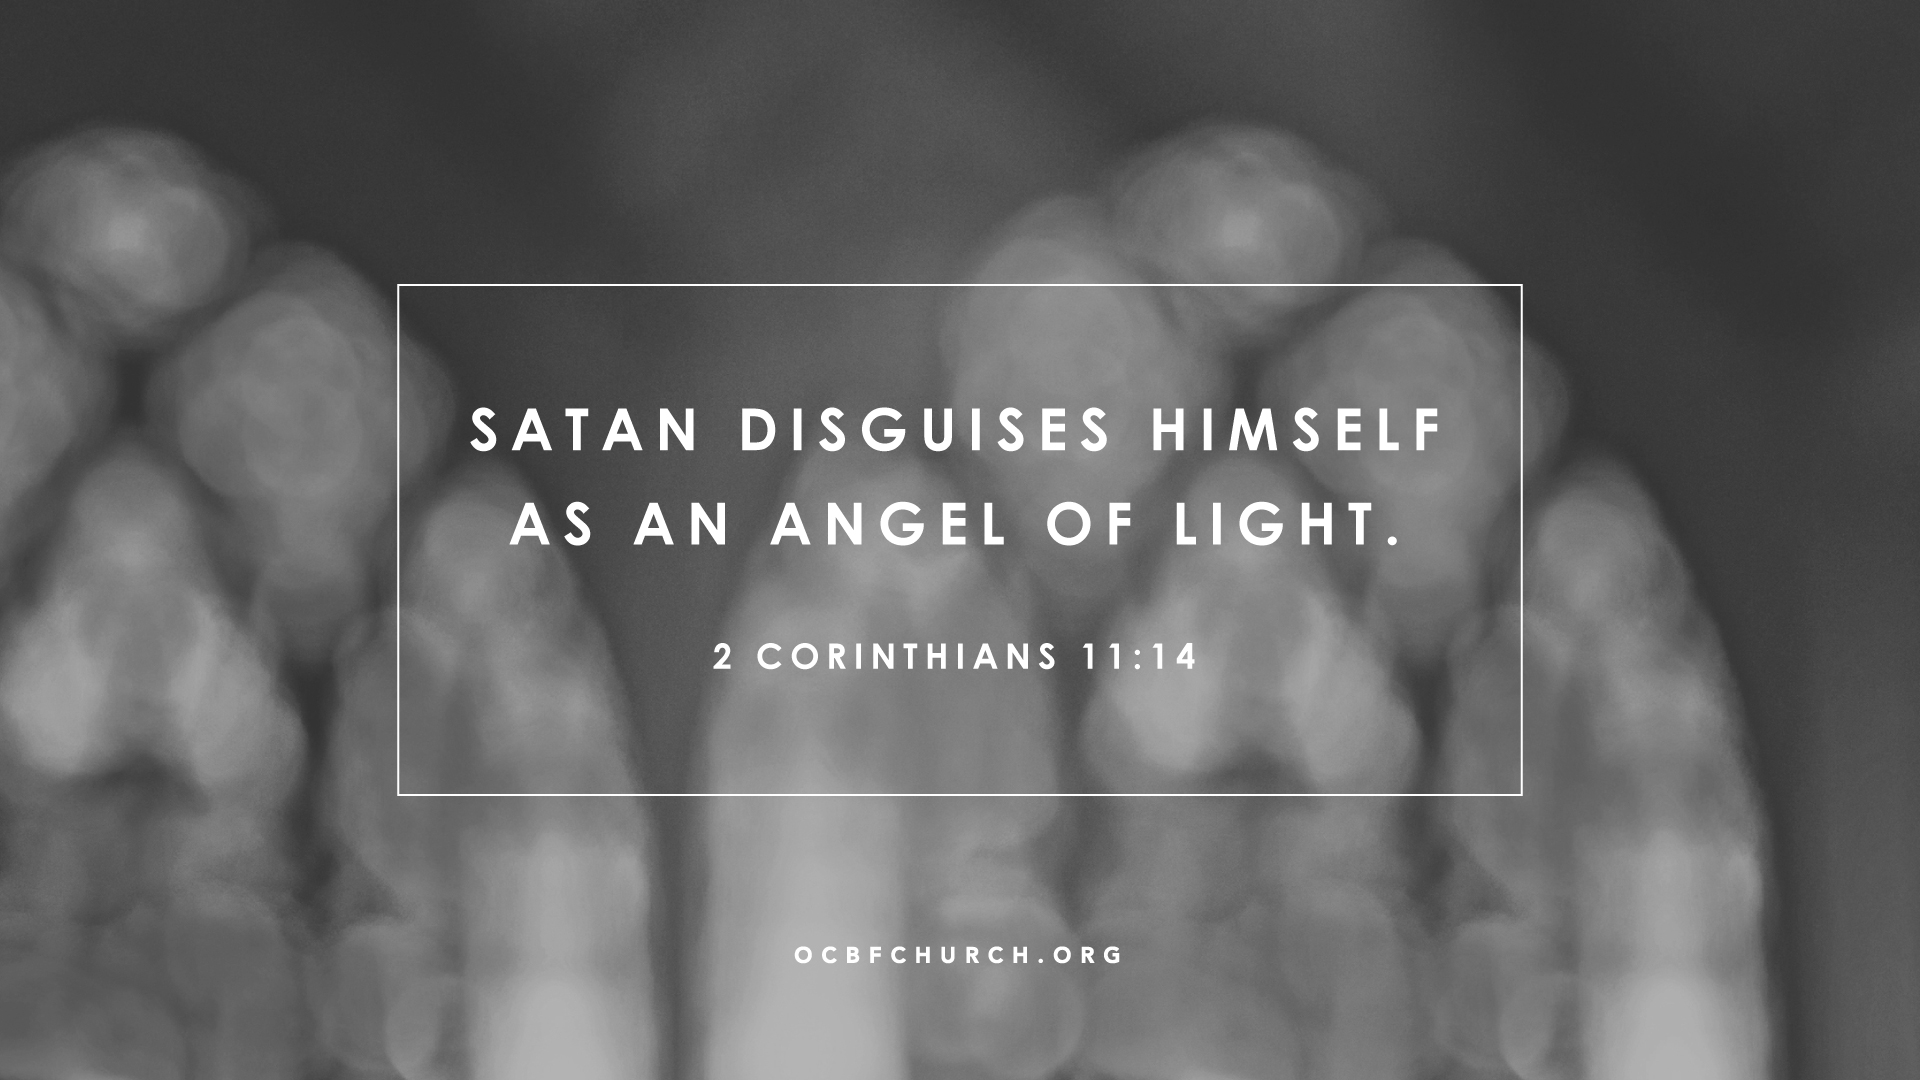 Bible Fellowship on Twitter: "Satan disguises himself as an angel of light. https://t.co/uGhUDcYbLz" /